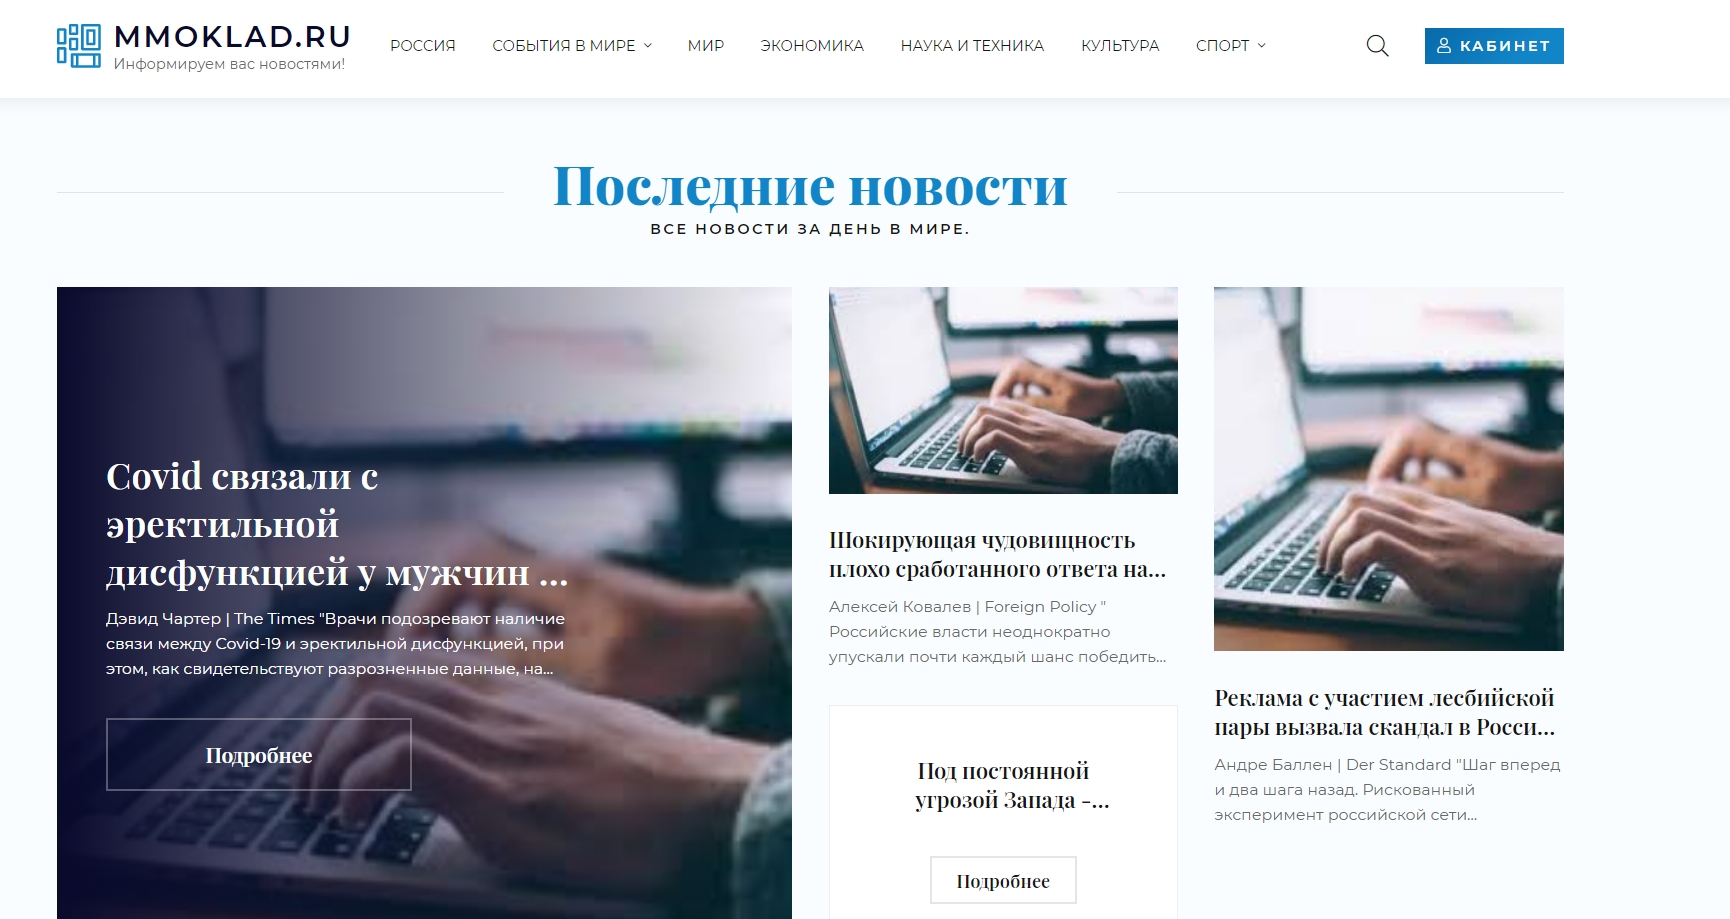 mmoklad.ru - »нформационное агентство.